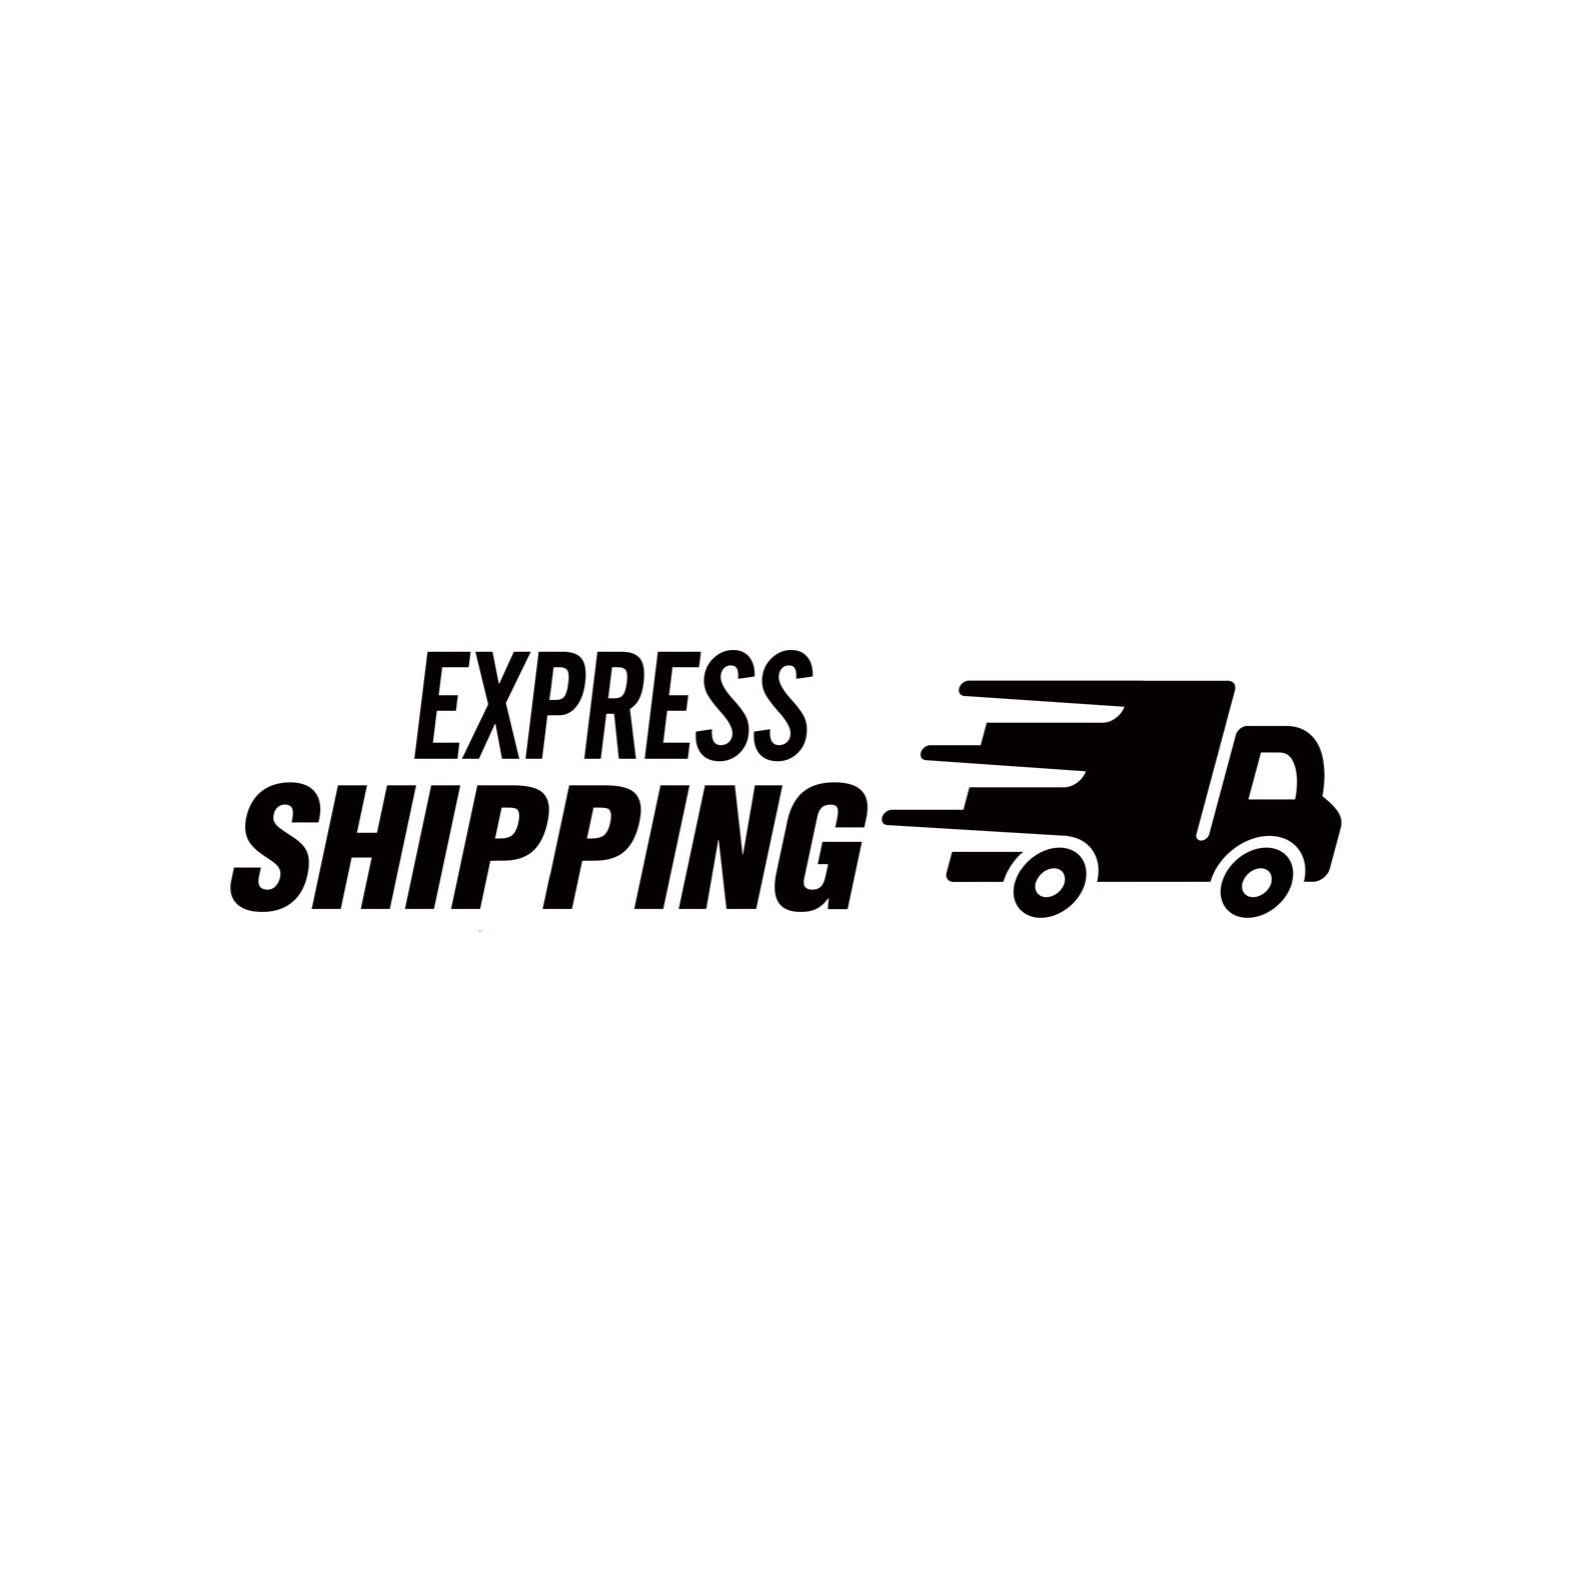 (USA) Express Shipping